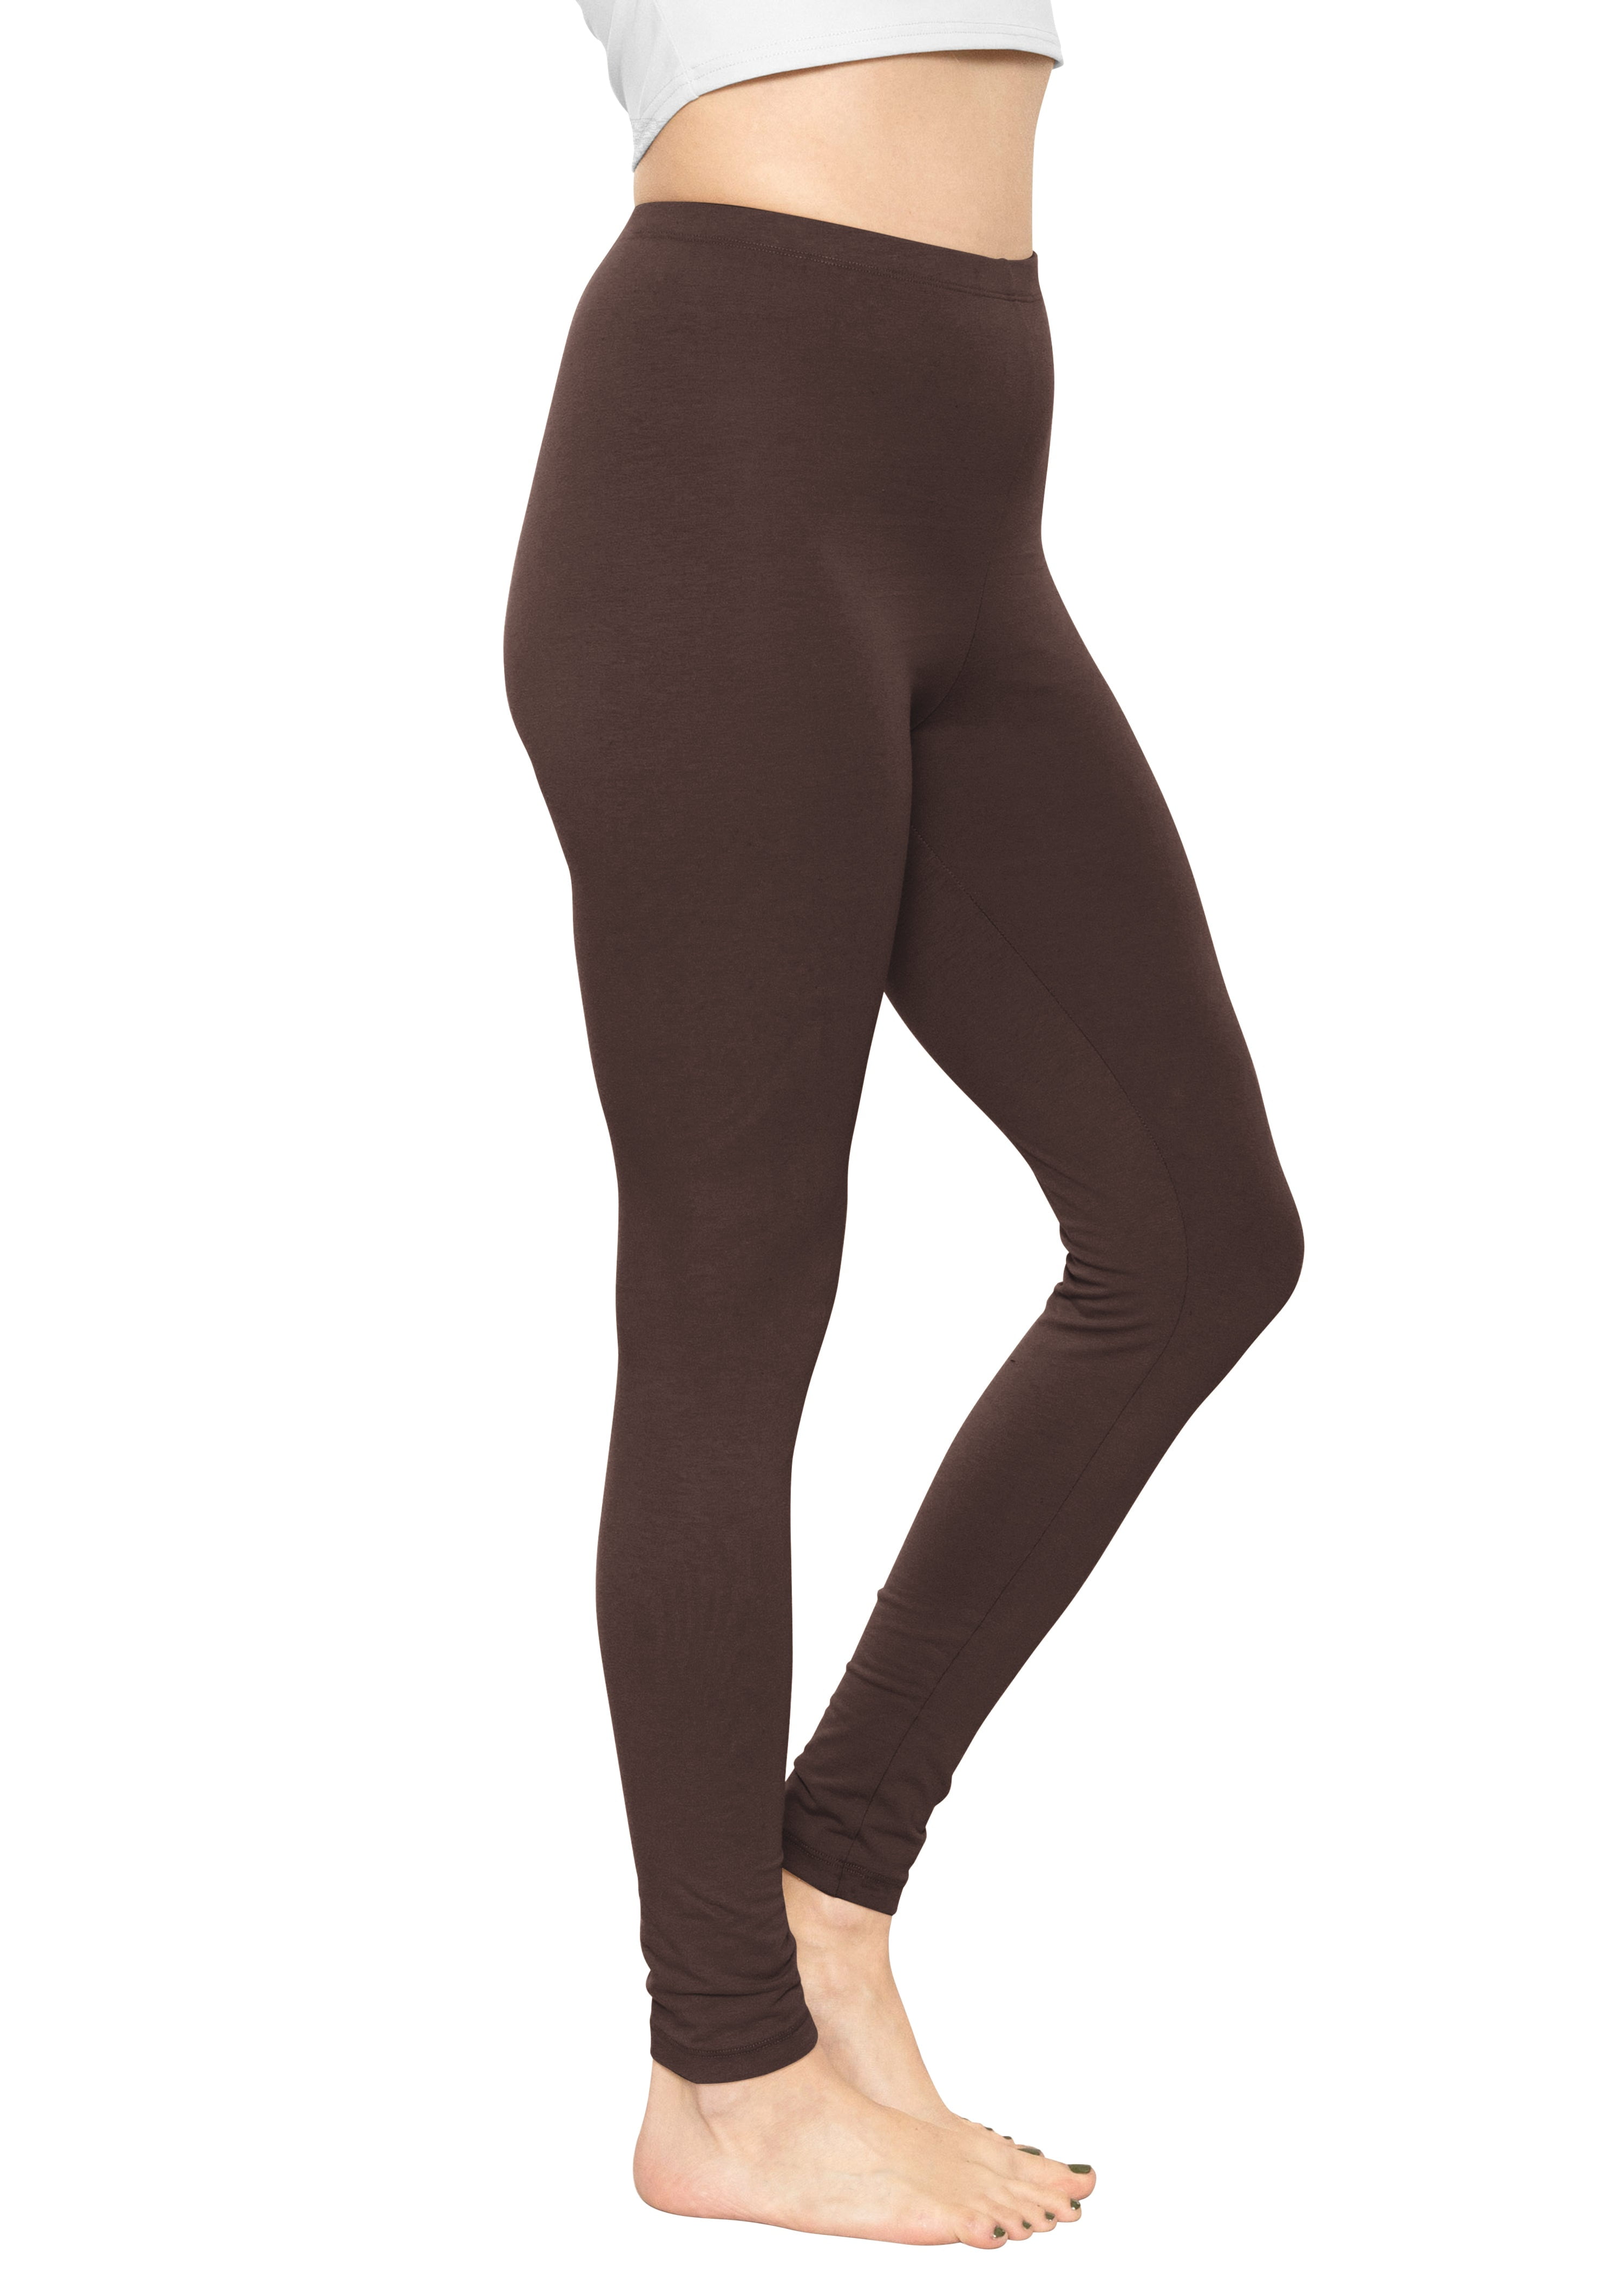 Womens Premium Cotton Full Length Leggings Multi Colors (S-XL) - KOGMO